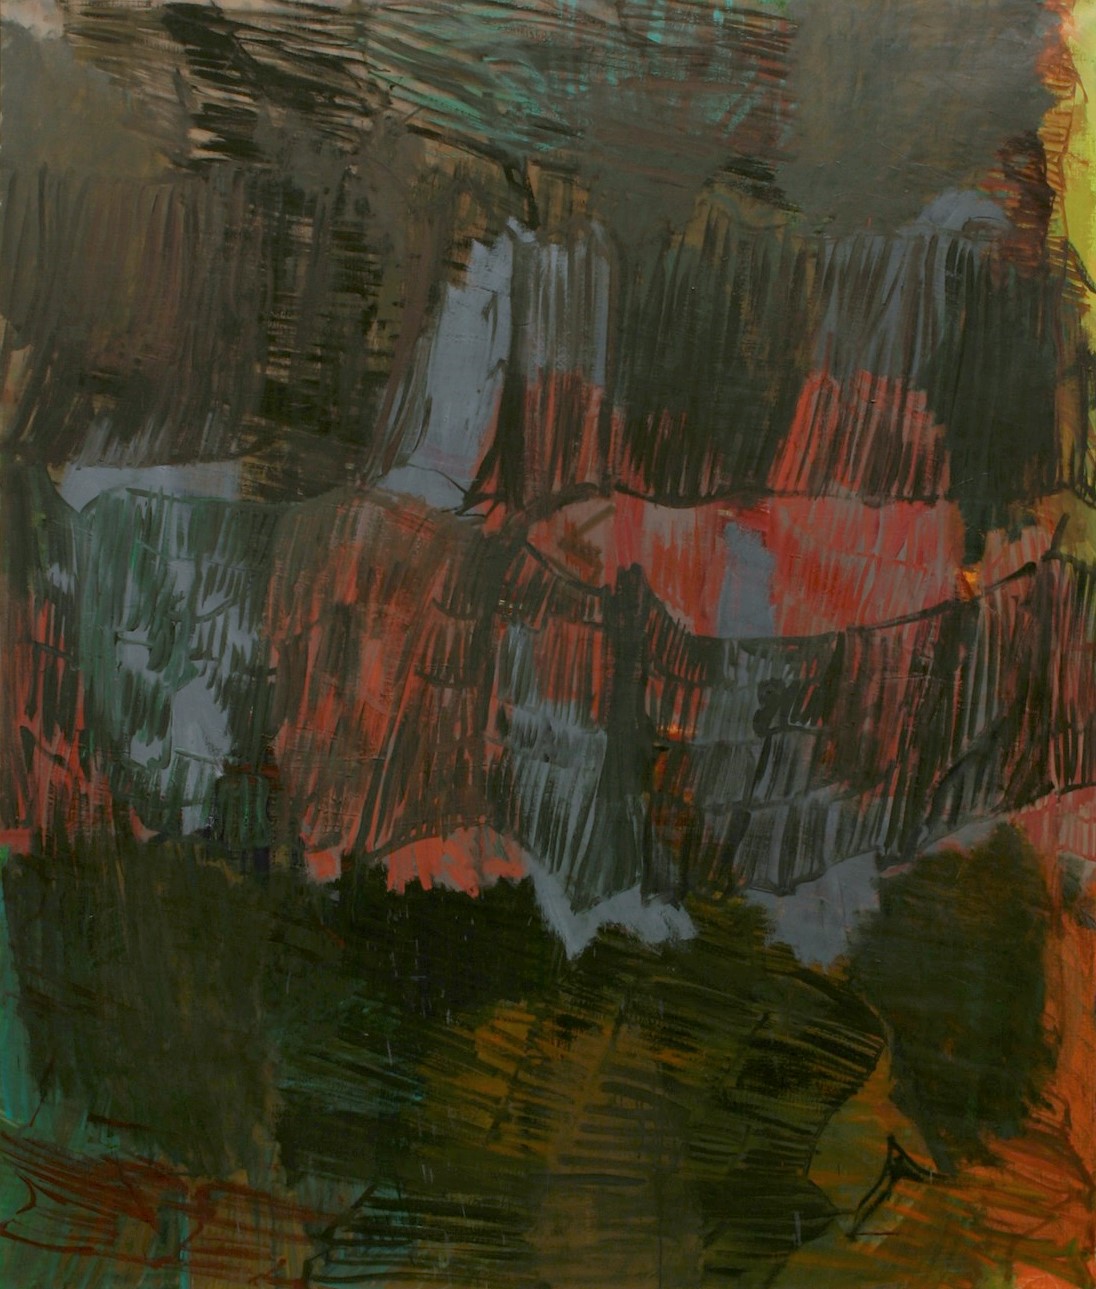 Per Kirkeby, Herbst-Anastasia, 1999, oil on canvas, 200 x 170 cm